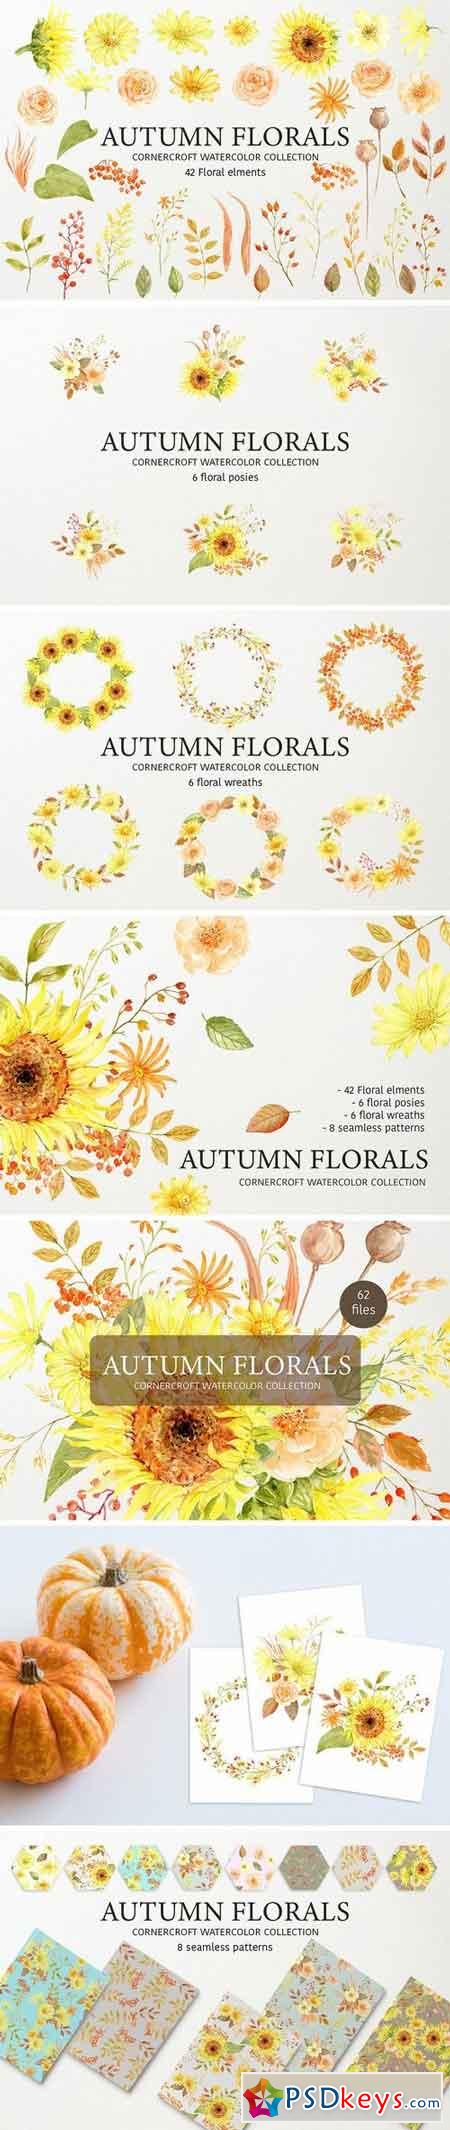 Autumn Floral Collection 2840864